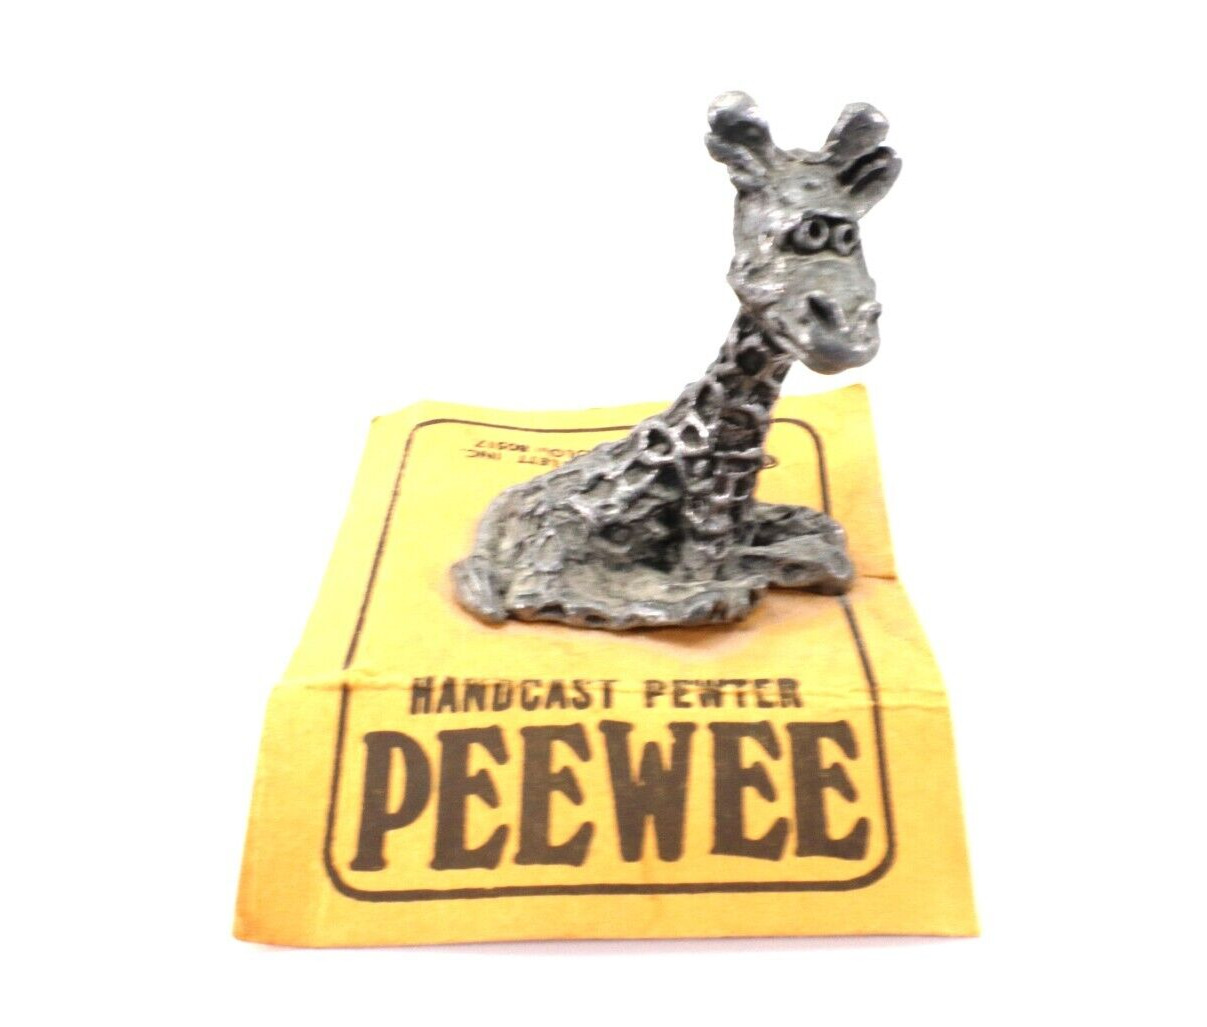 Handcast Pewter Mini Figurine PEEWEE GIRAFFE Baby Sitting on Paper 1972 Vintage